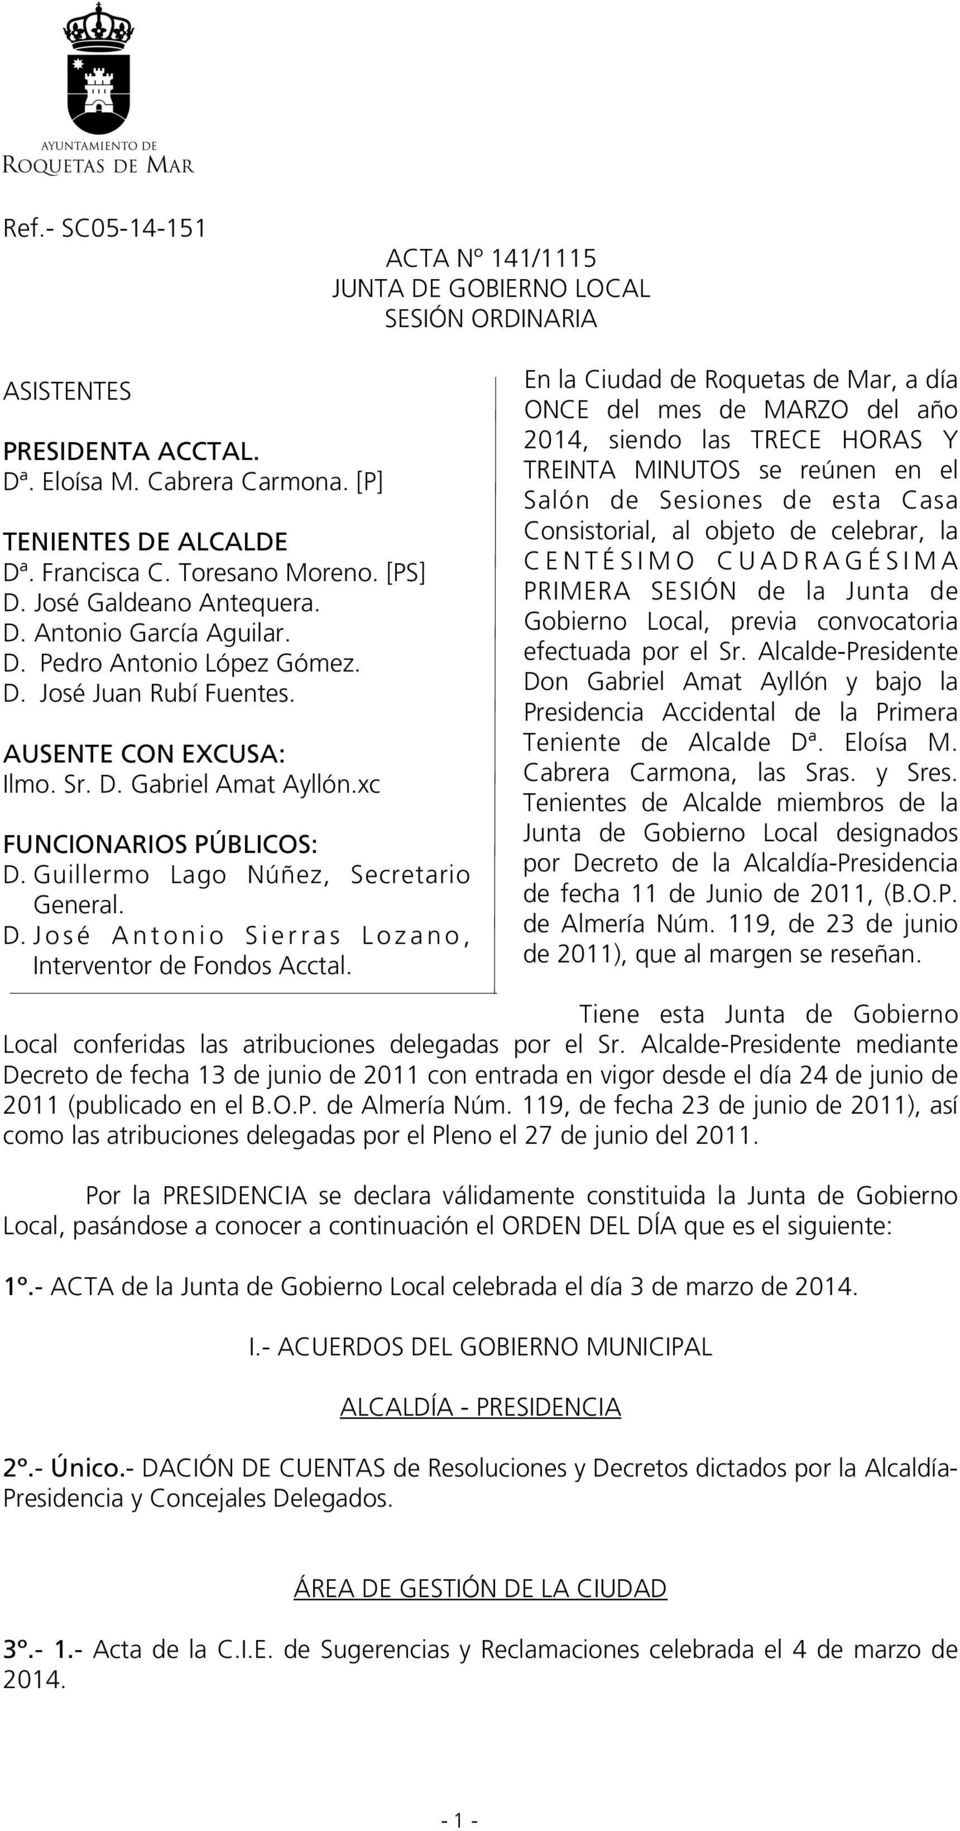 Guillermo Lago Núñez, Secretario General. D. J o s é A n t o n i o S i e r r a s L o z a n o, Interventor de Fondos Acctal.